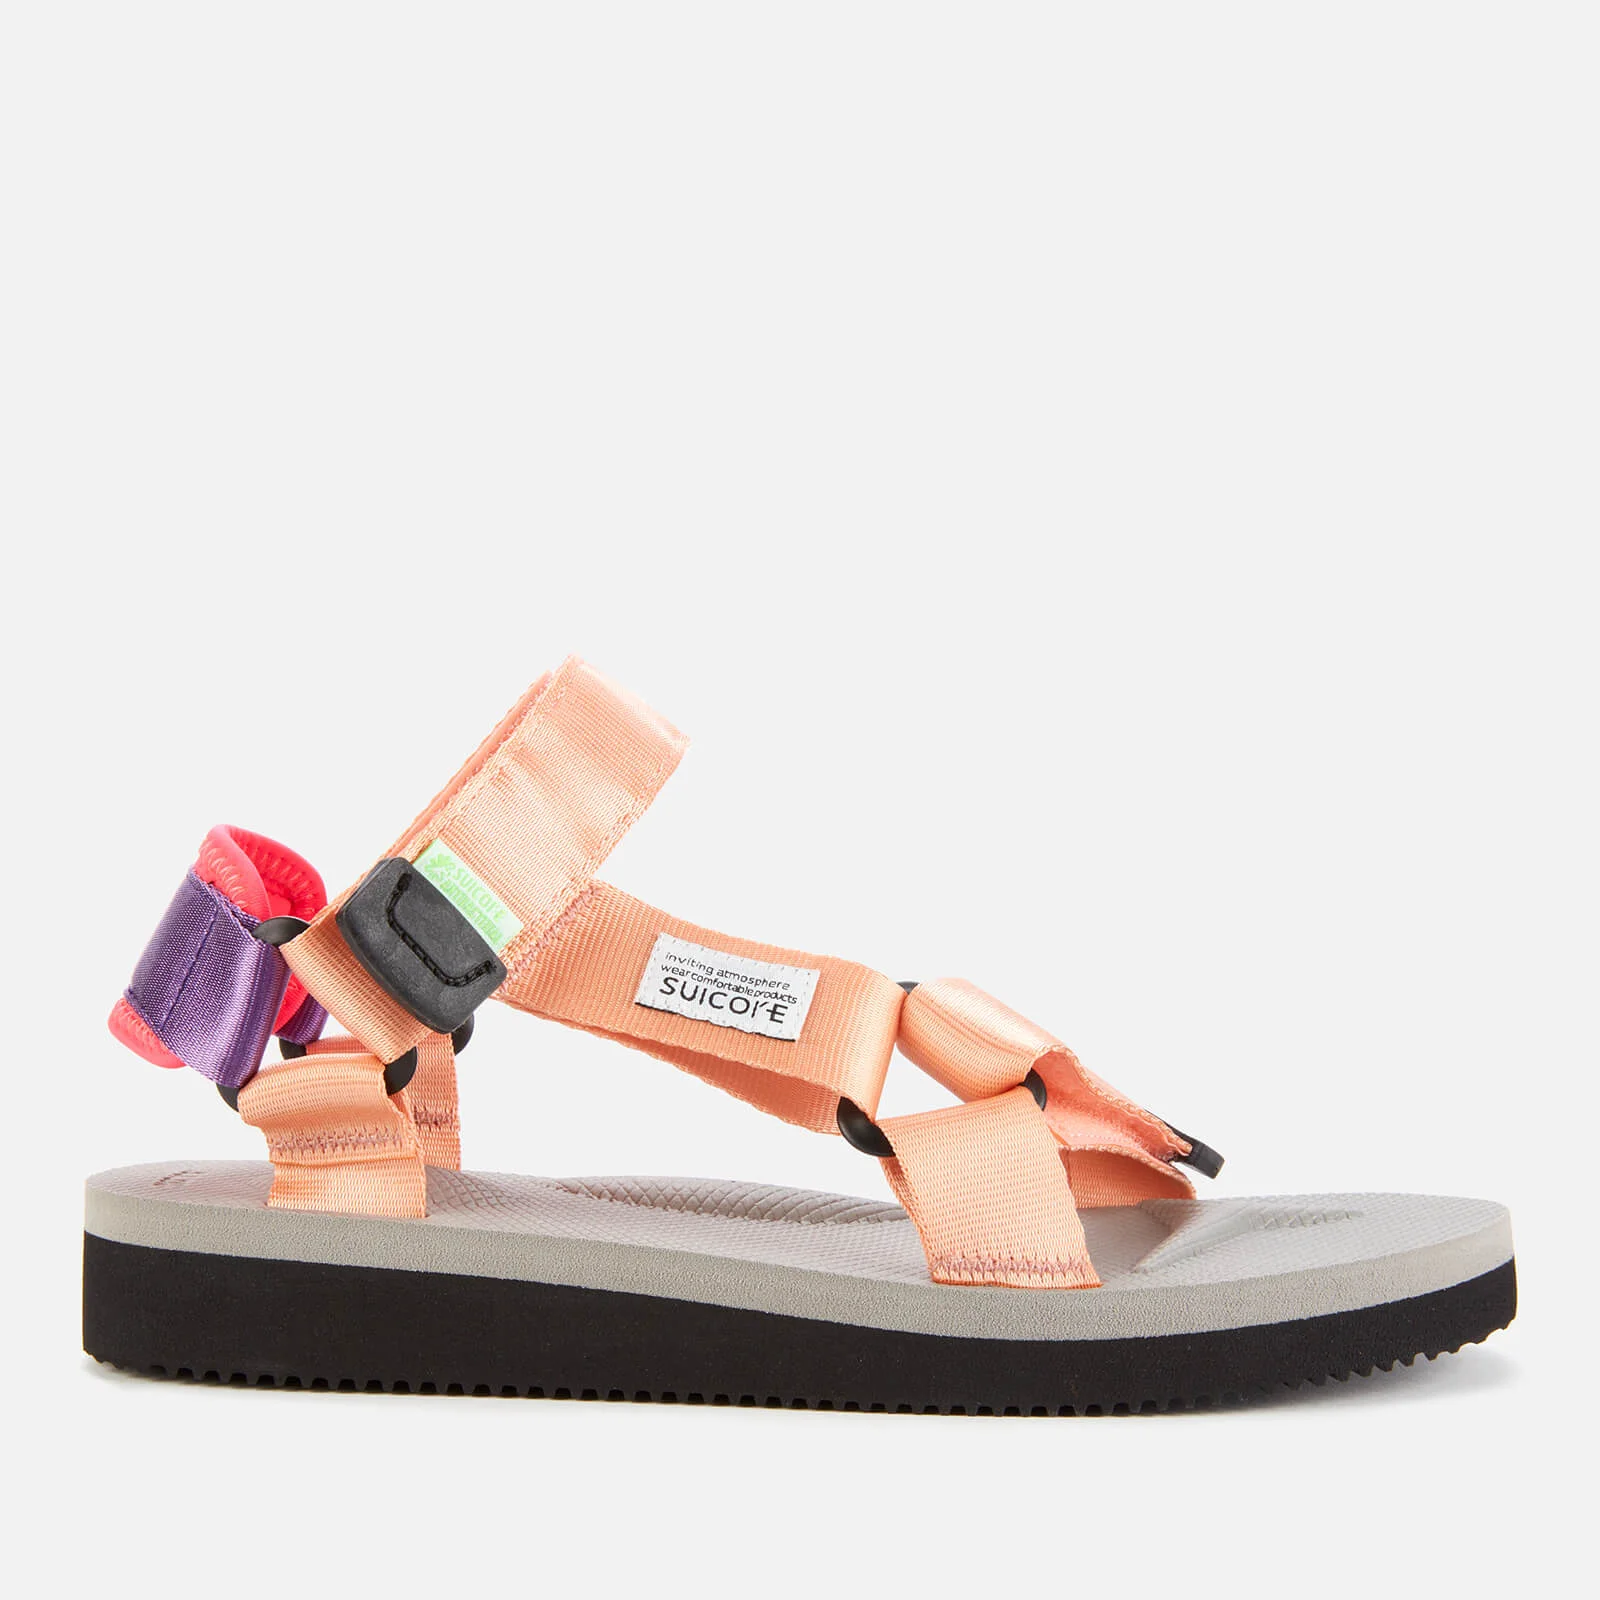 Suicoke Women's Depa Cab Nylon Sandals - Pink/Grey Image 1